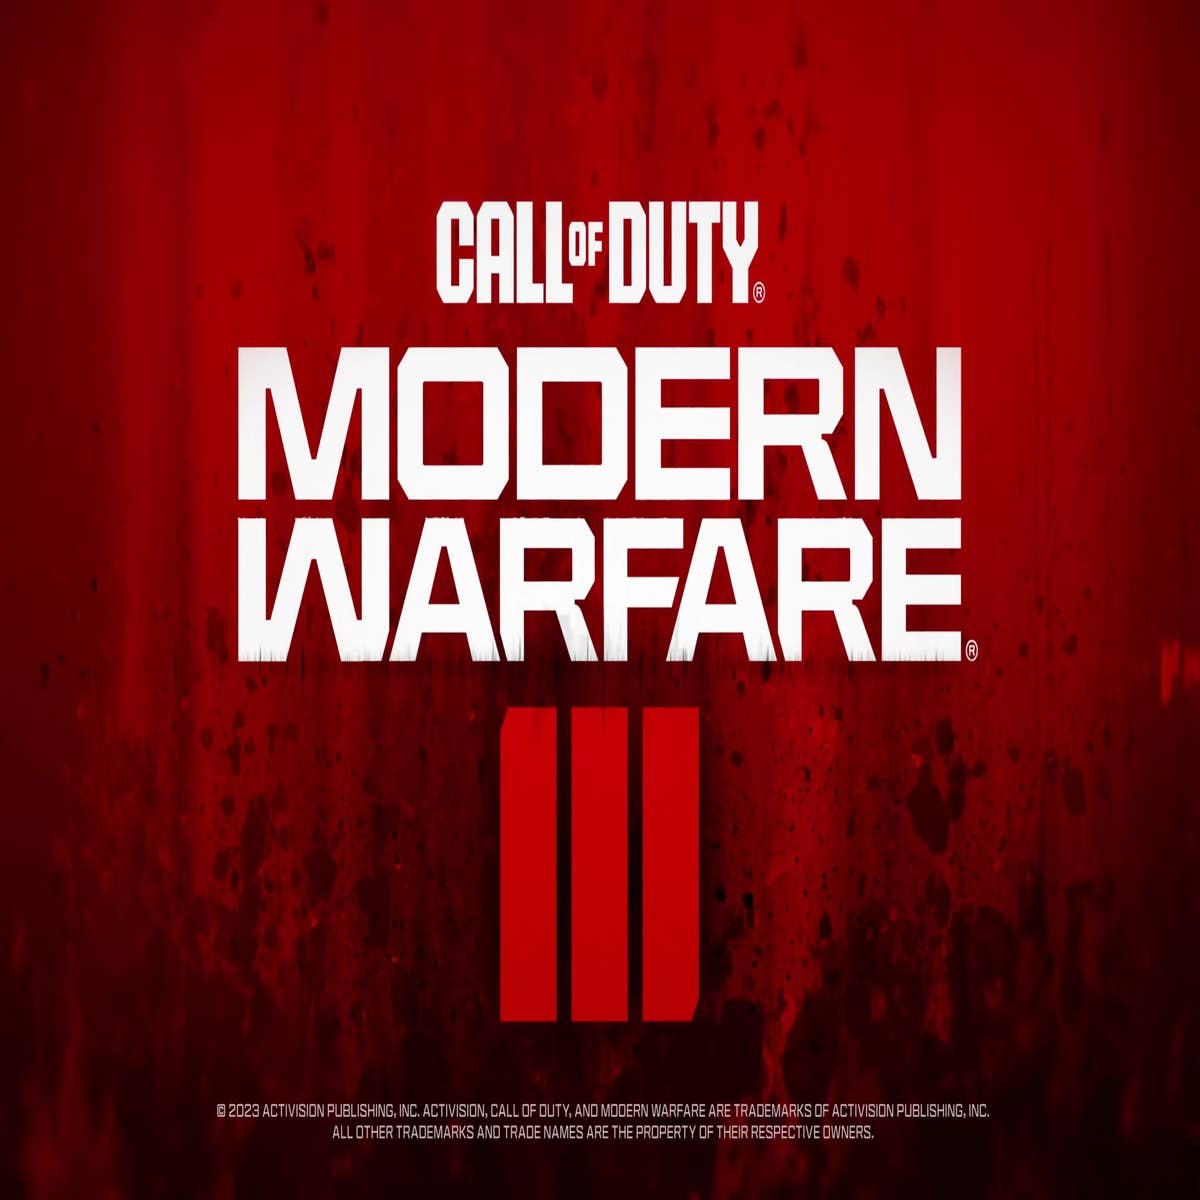 Call of Duty: Modern Warfare II Editions FAQ